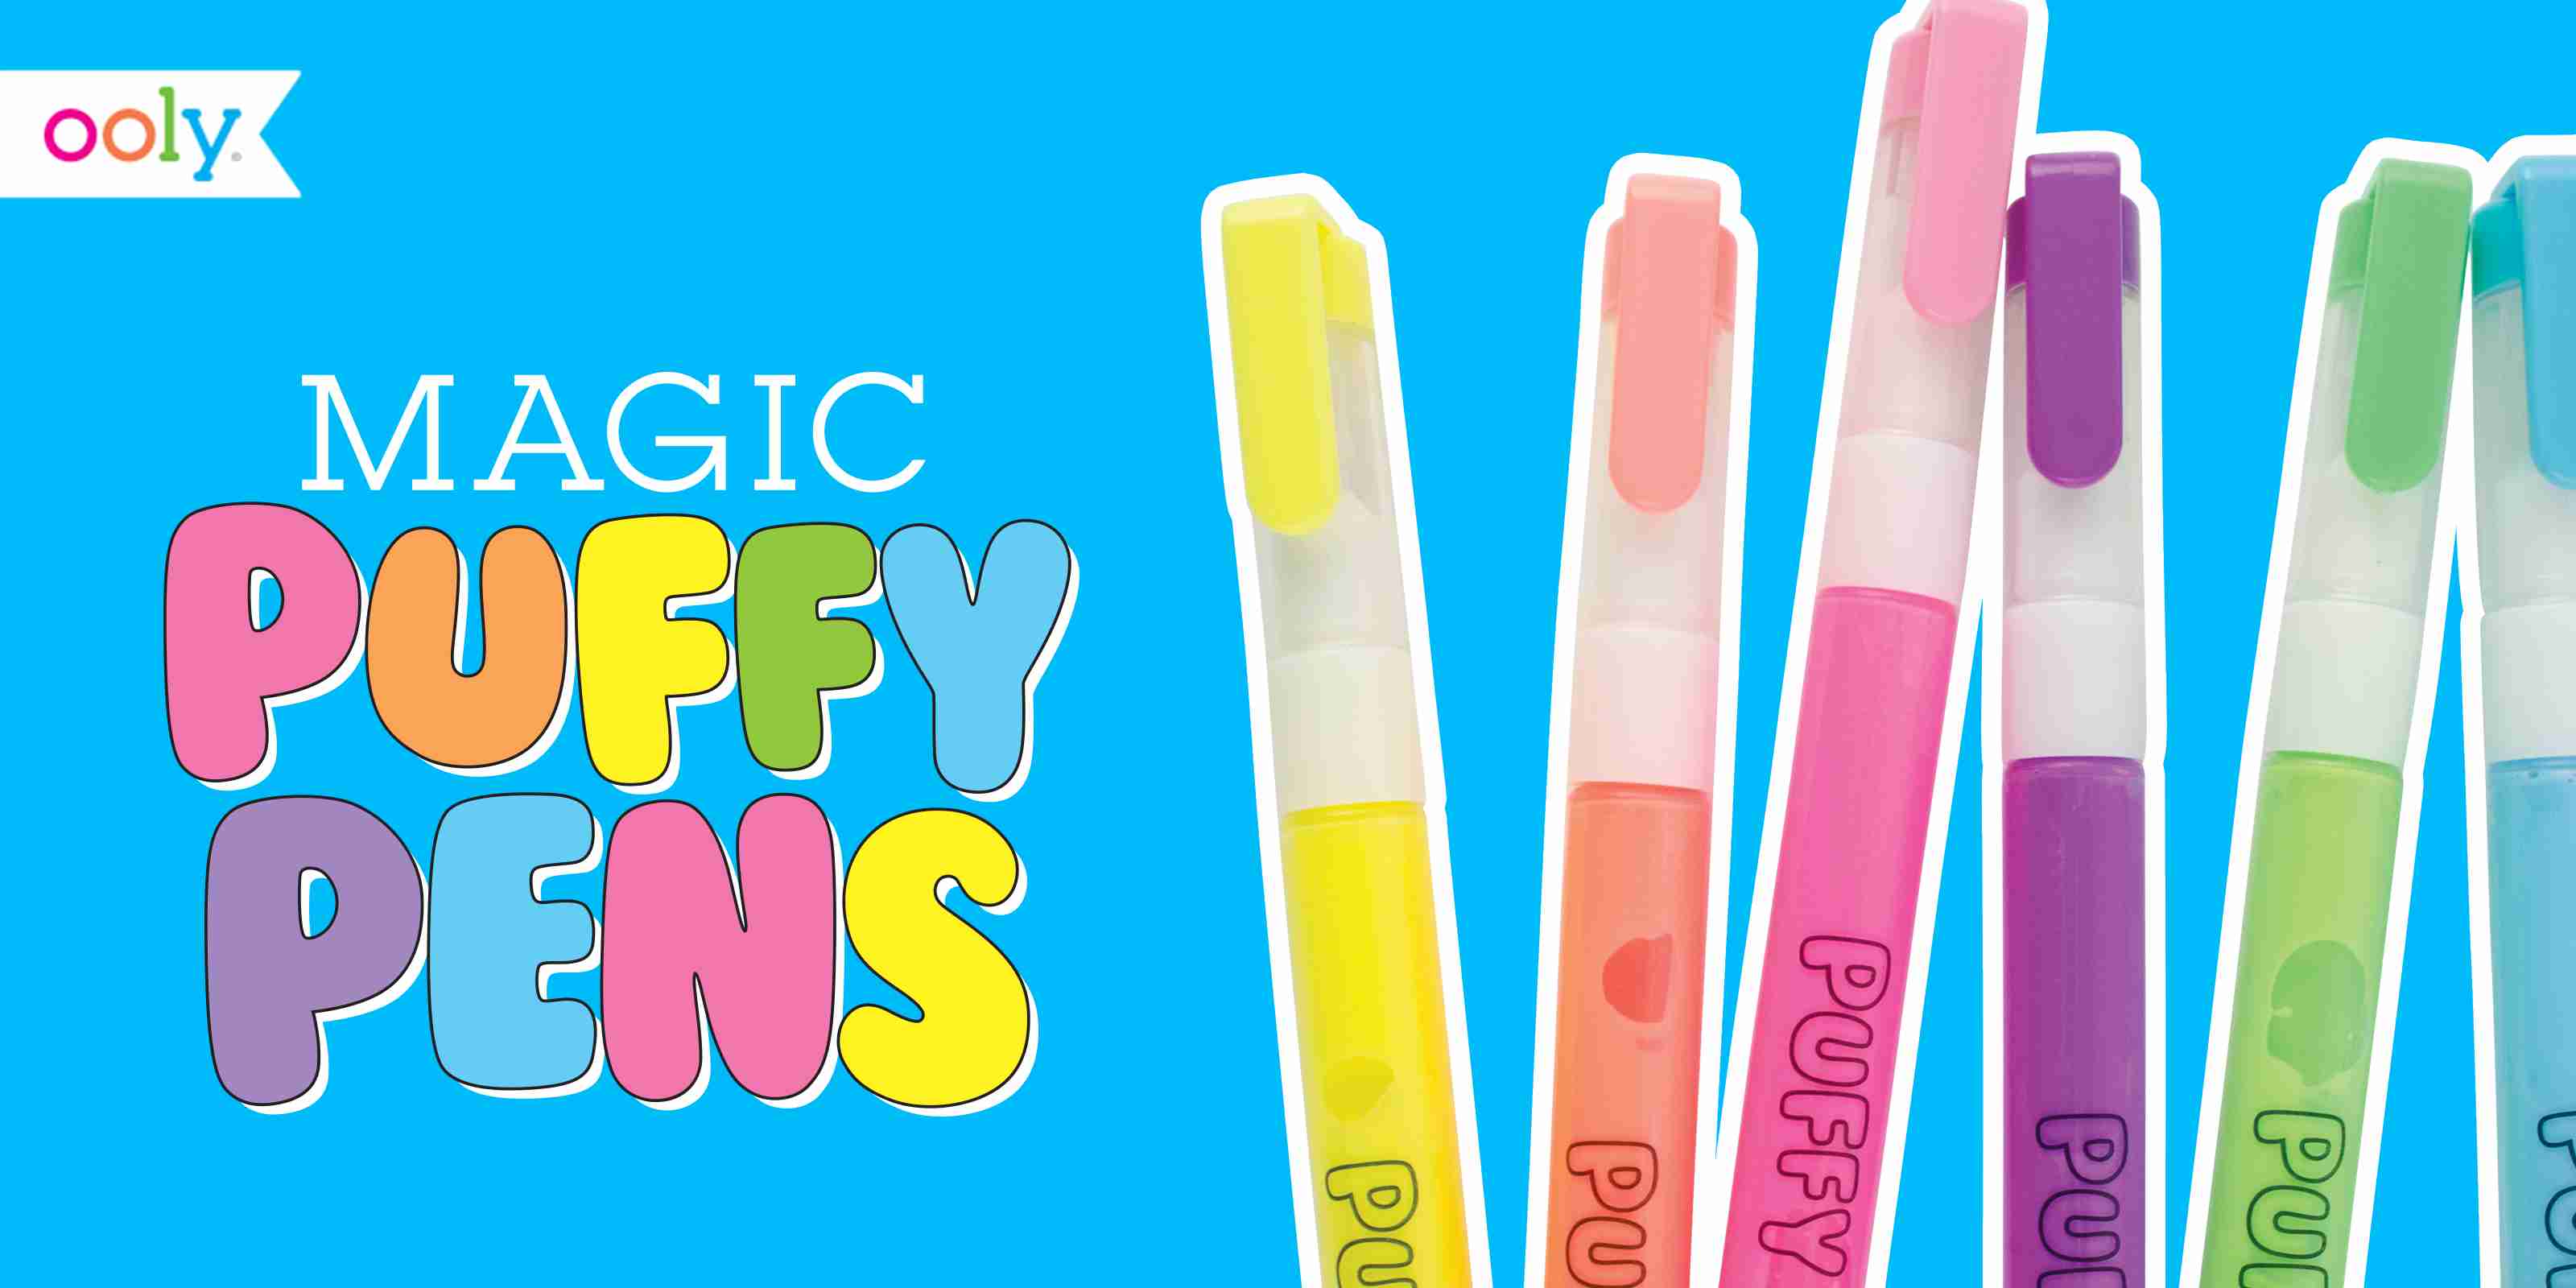  lfjfaecx Magic Puffy Pens for Girls, Ljjfbsdg Bubble